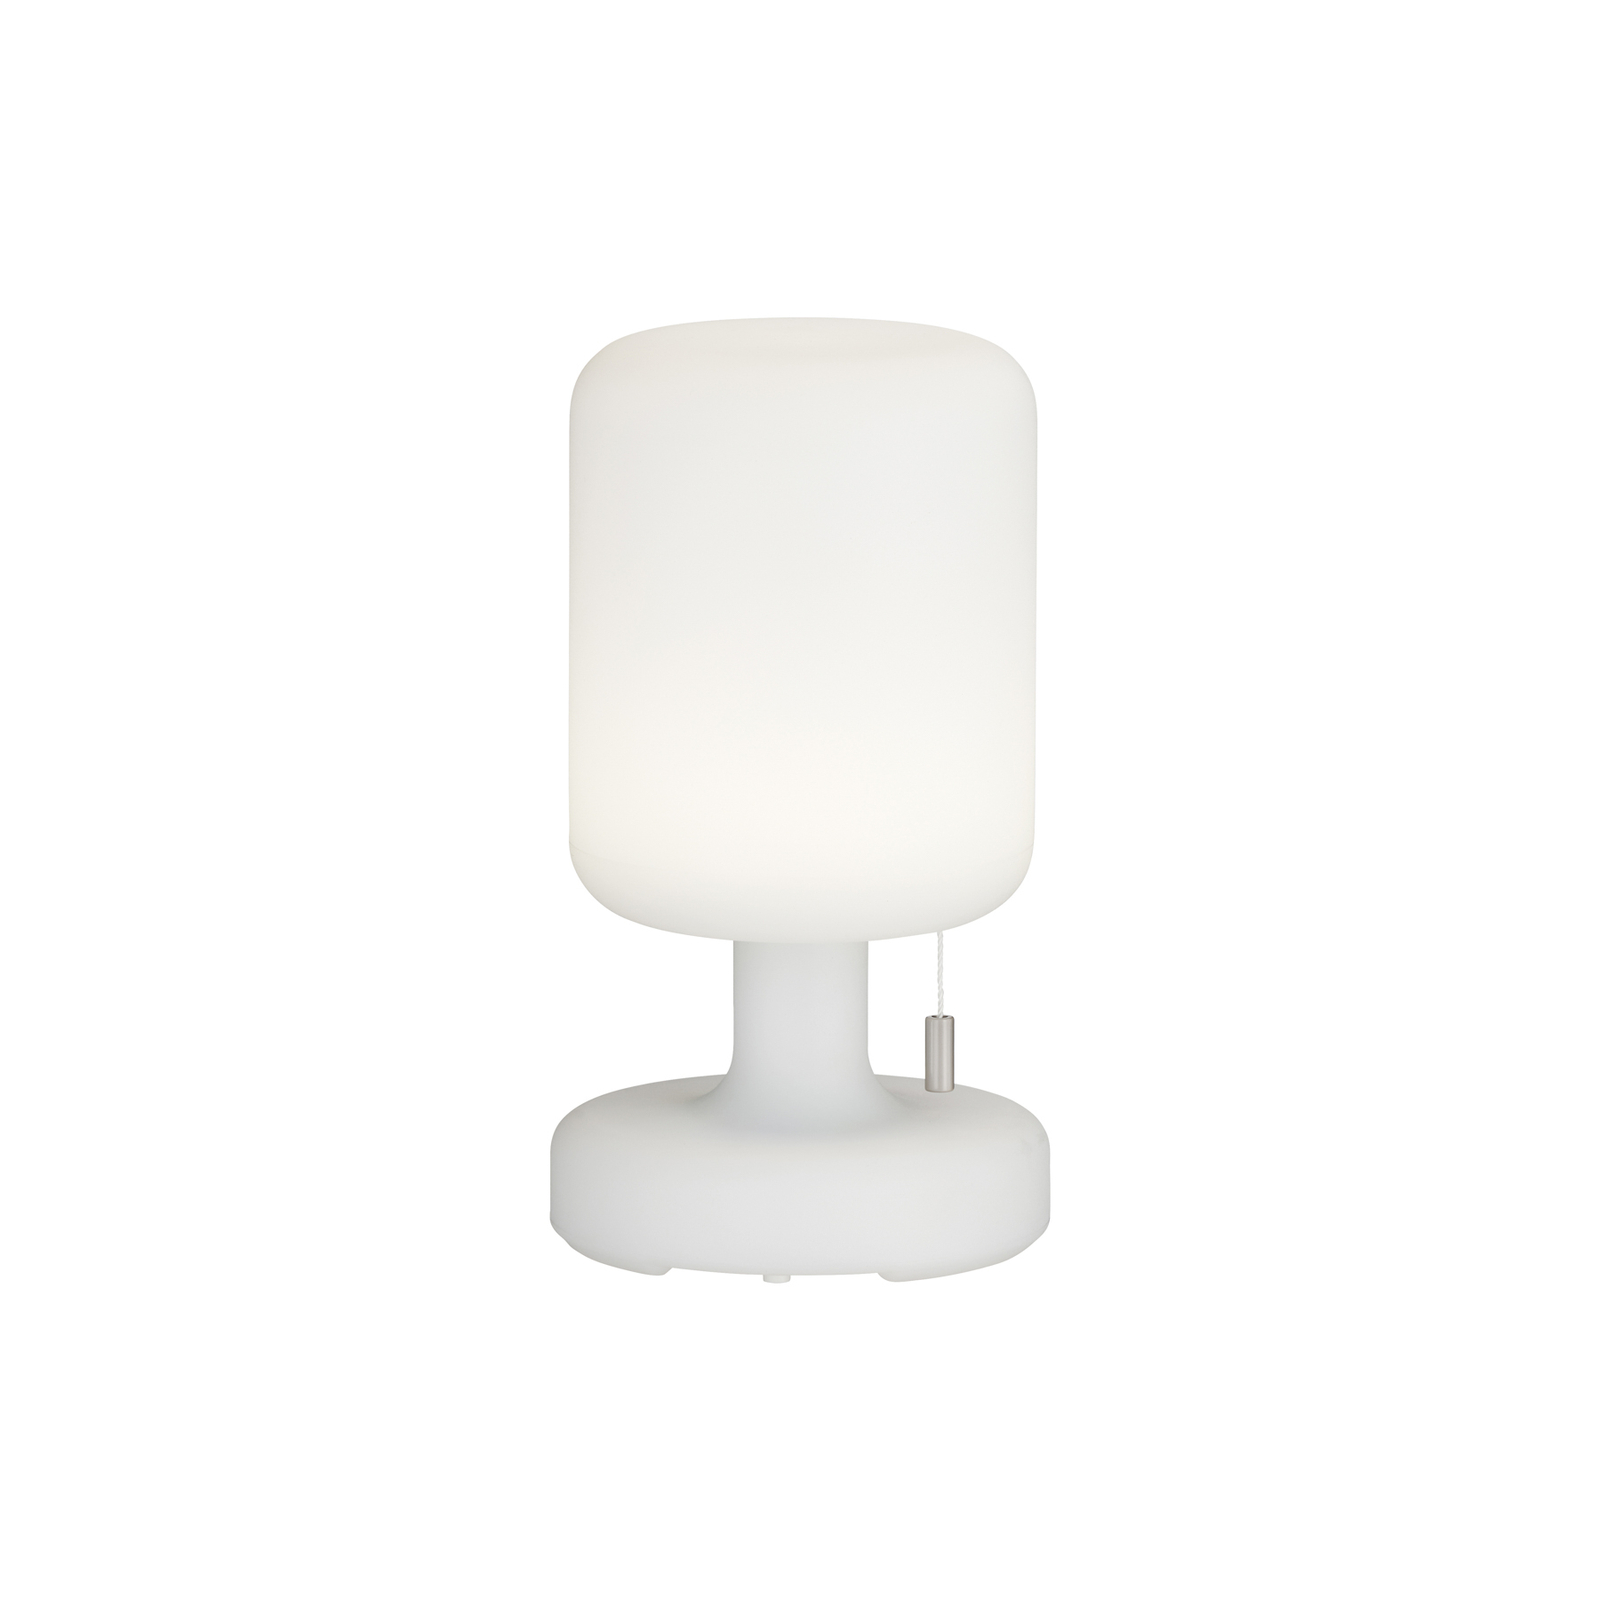 LED-akkupöytälamppu Termoli lieriö, korkeus 23 cm